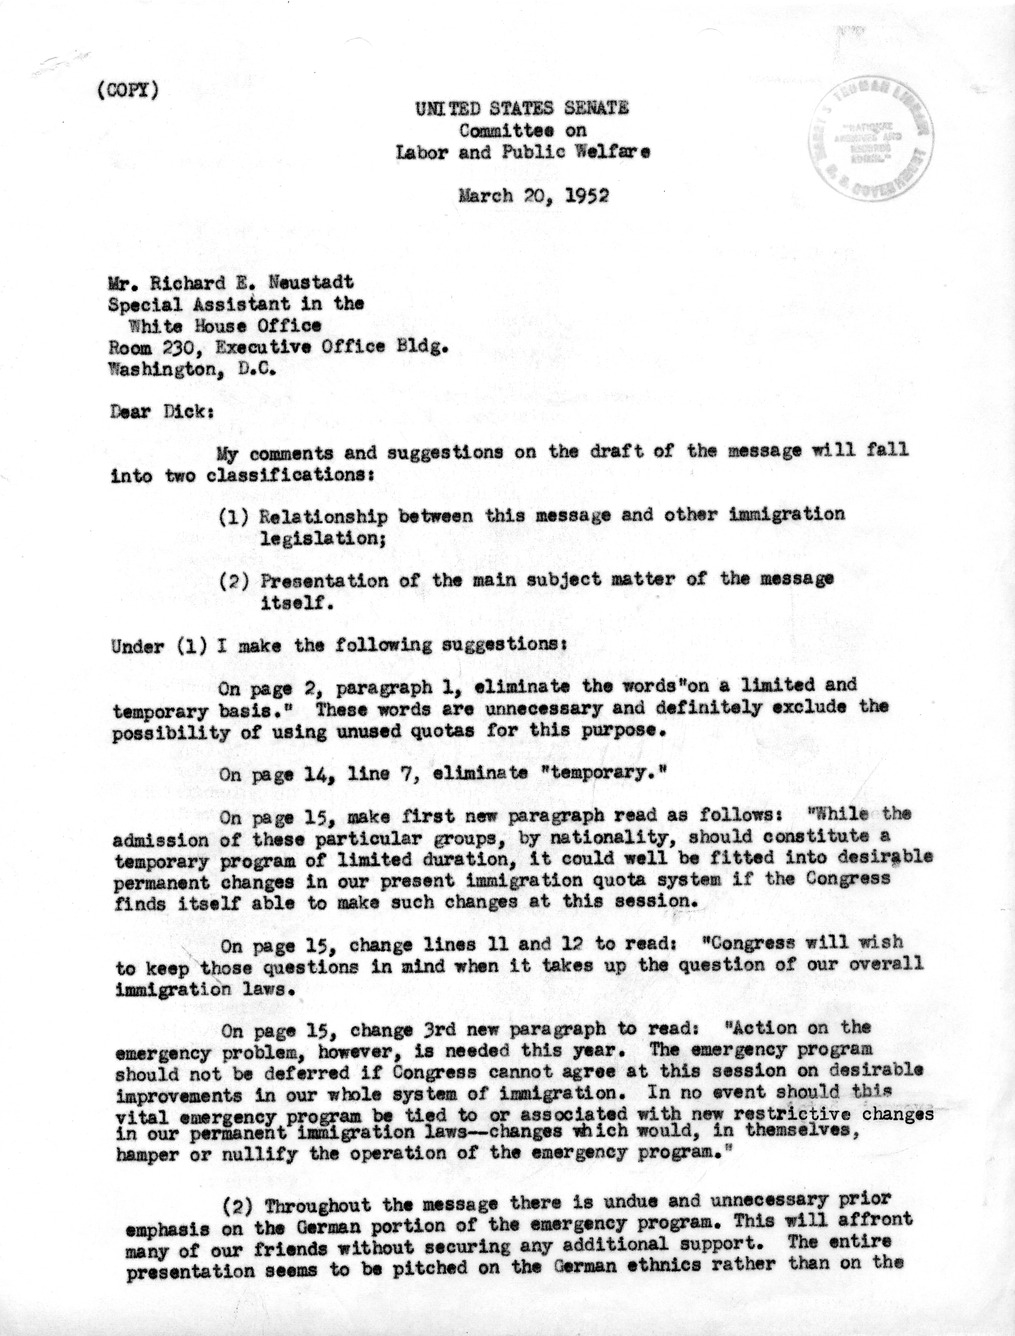 Memorandum from Julius Edelstein to Richard Neustadt